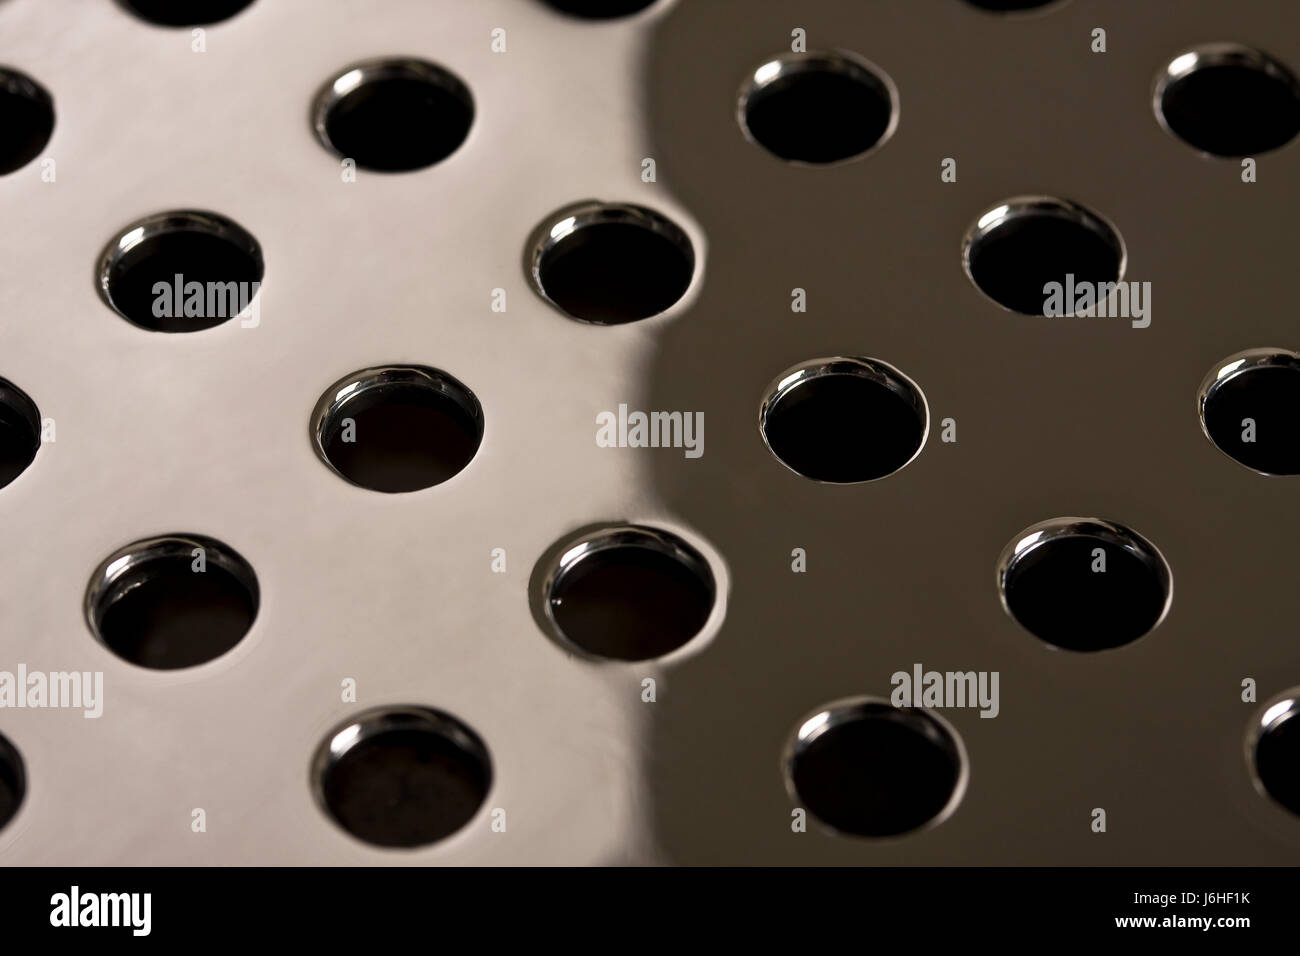 Brillance métallique aluminium aluminium trous trous de la grille grille mirrorfinish punch Banque D'Images